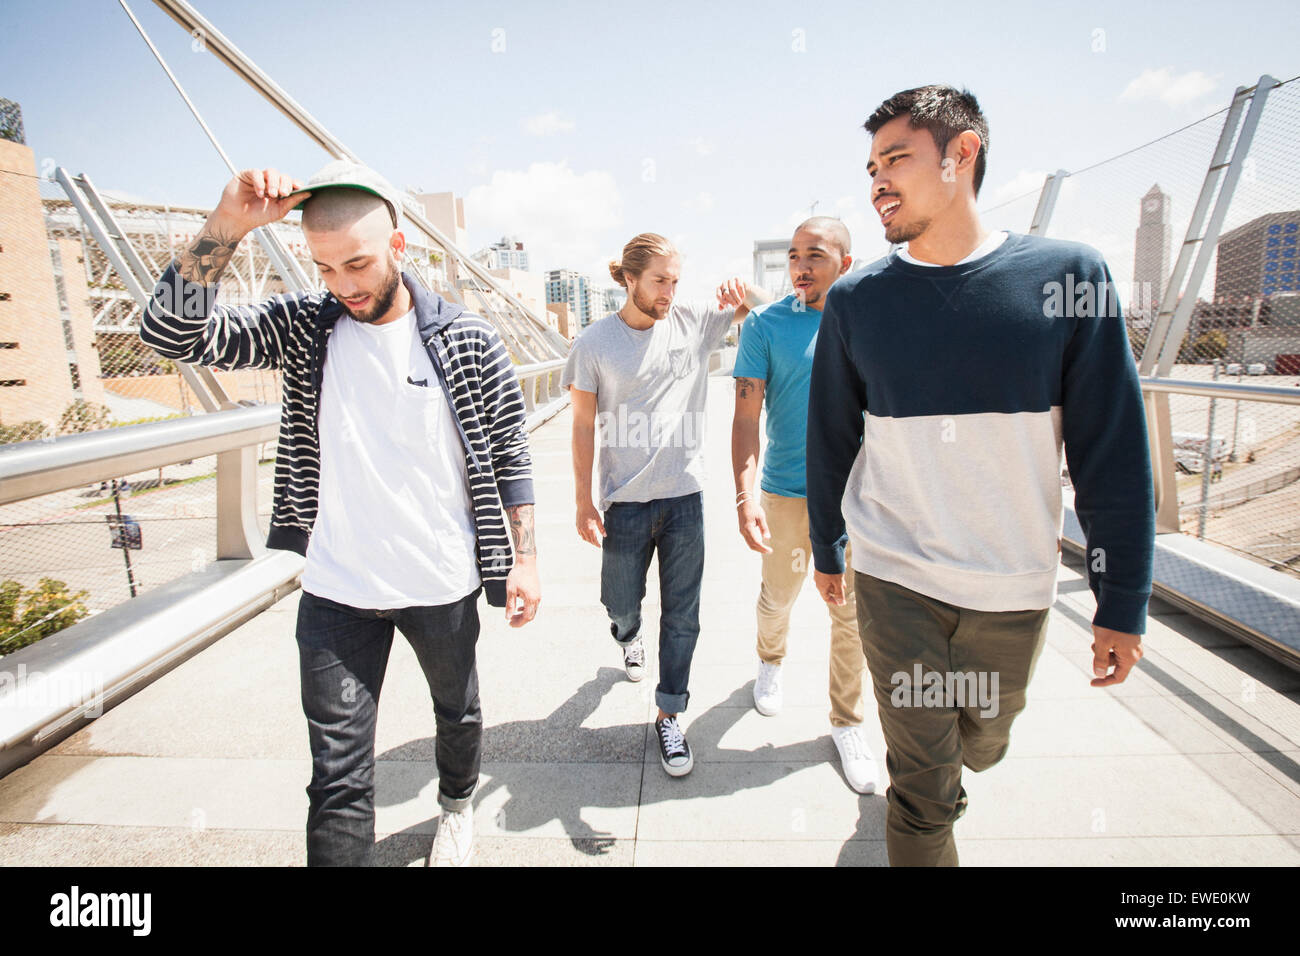 Group of young men walking along footbridge Stock Photo